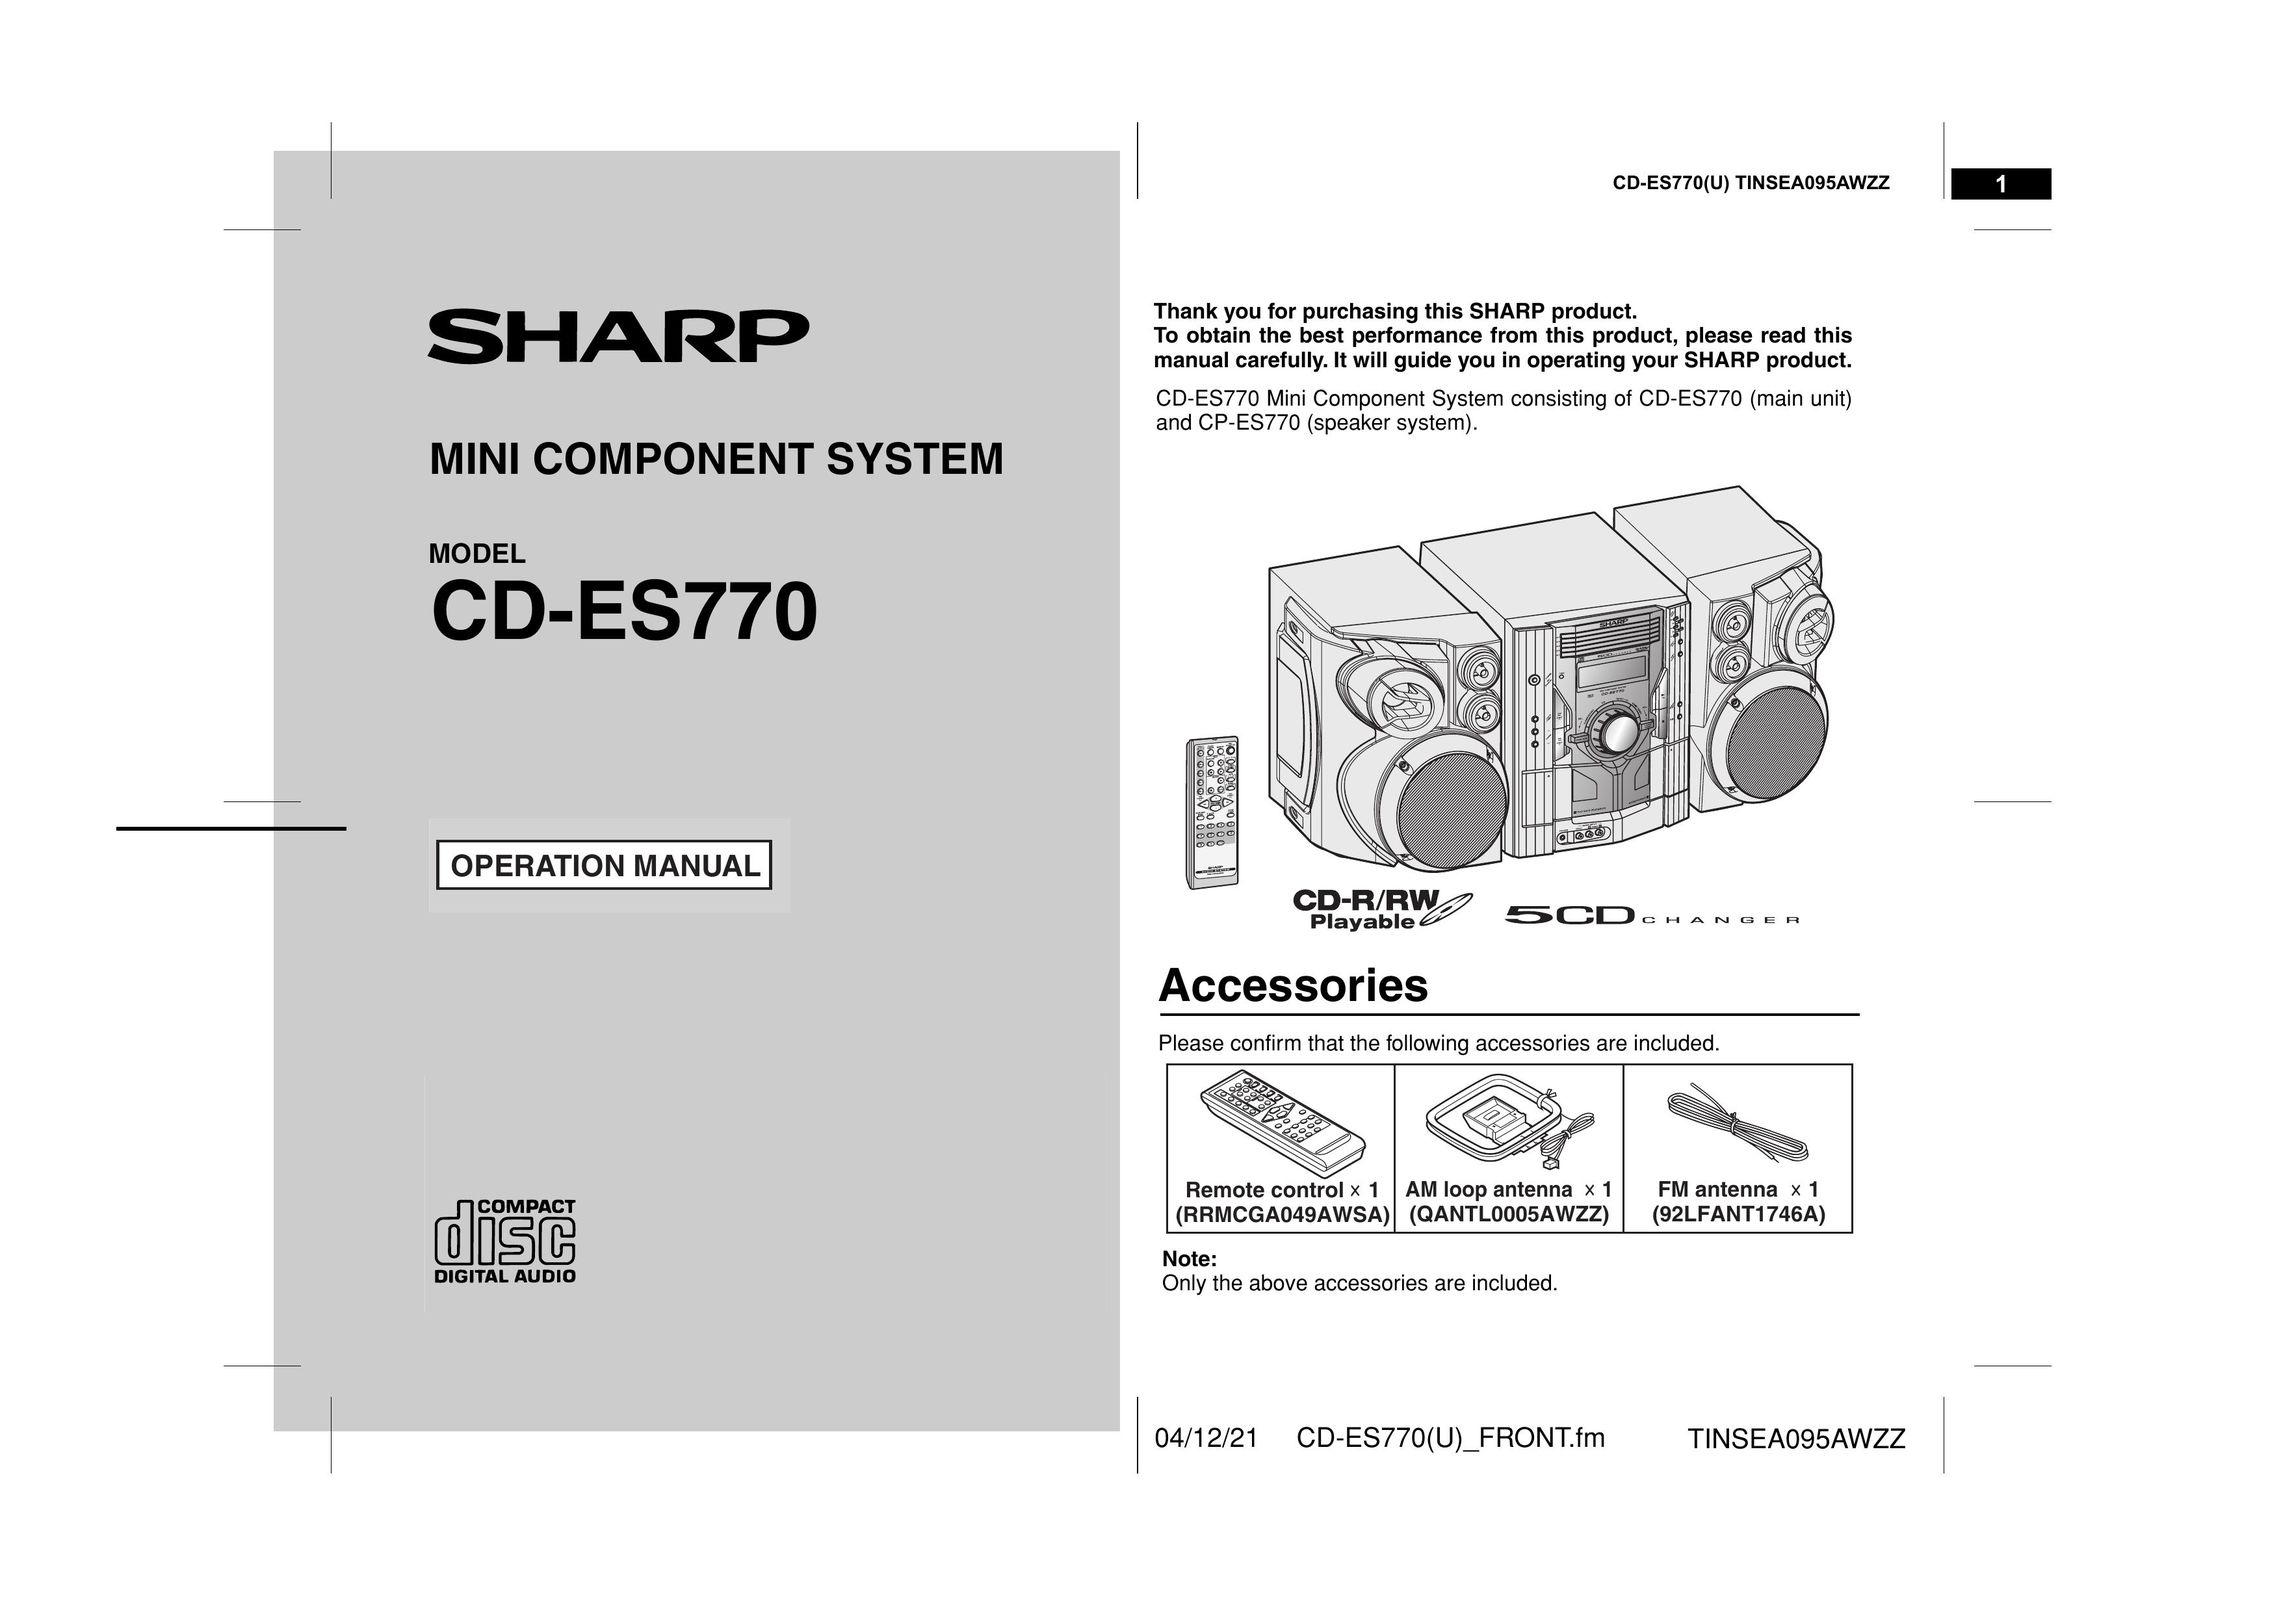 Sharp QANTL0005AWZZ Microwave Oven User Manual